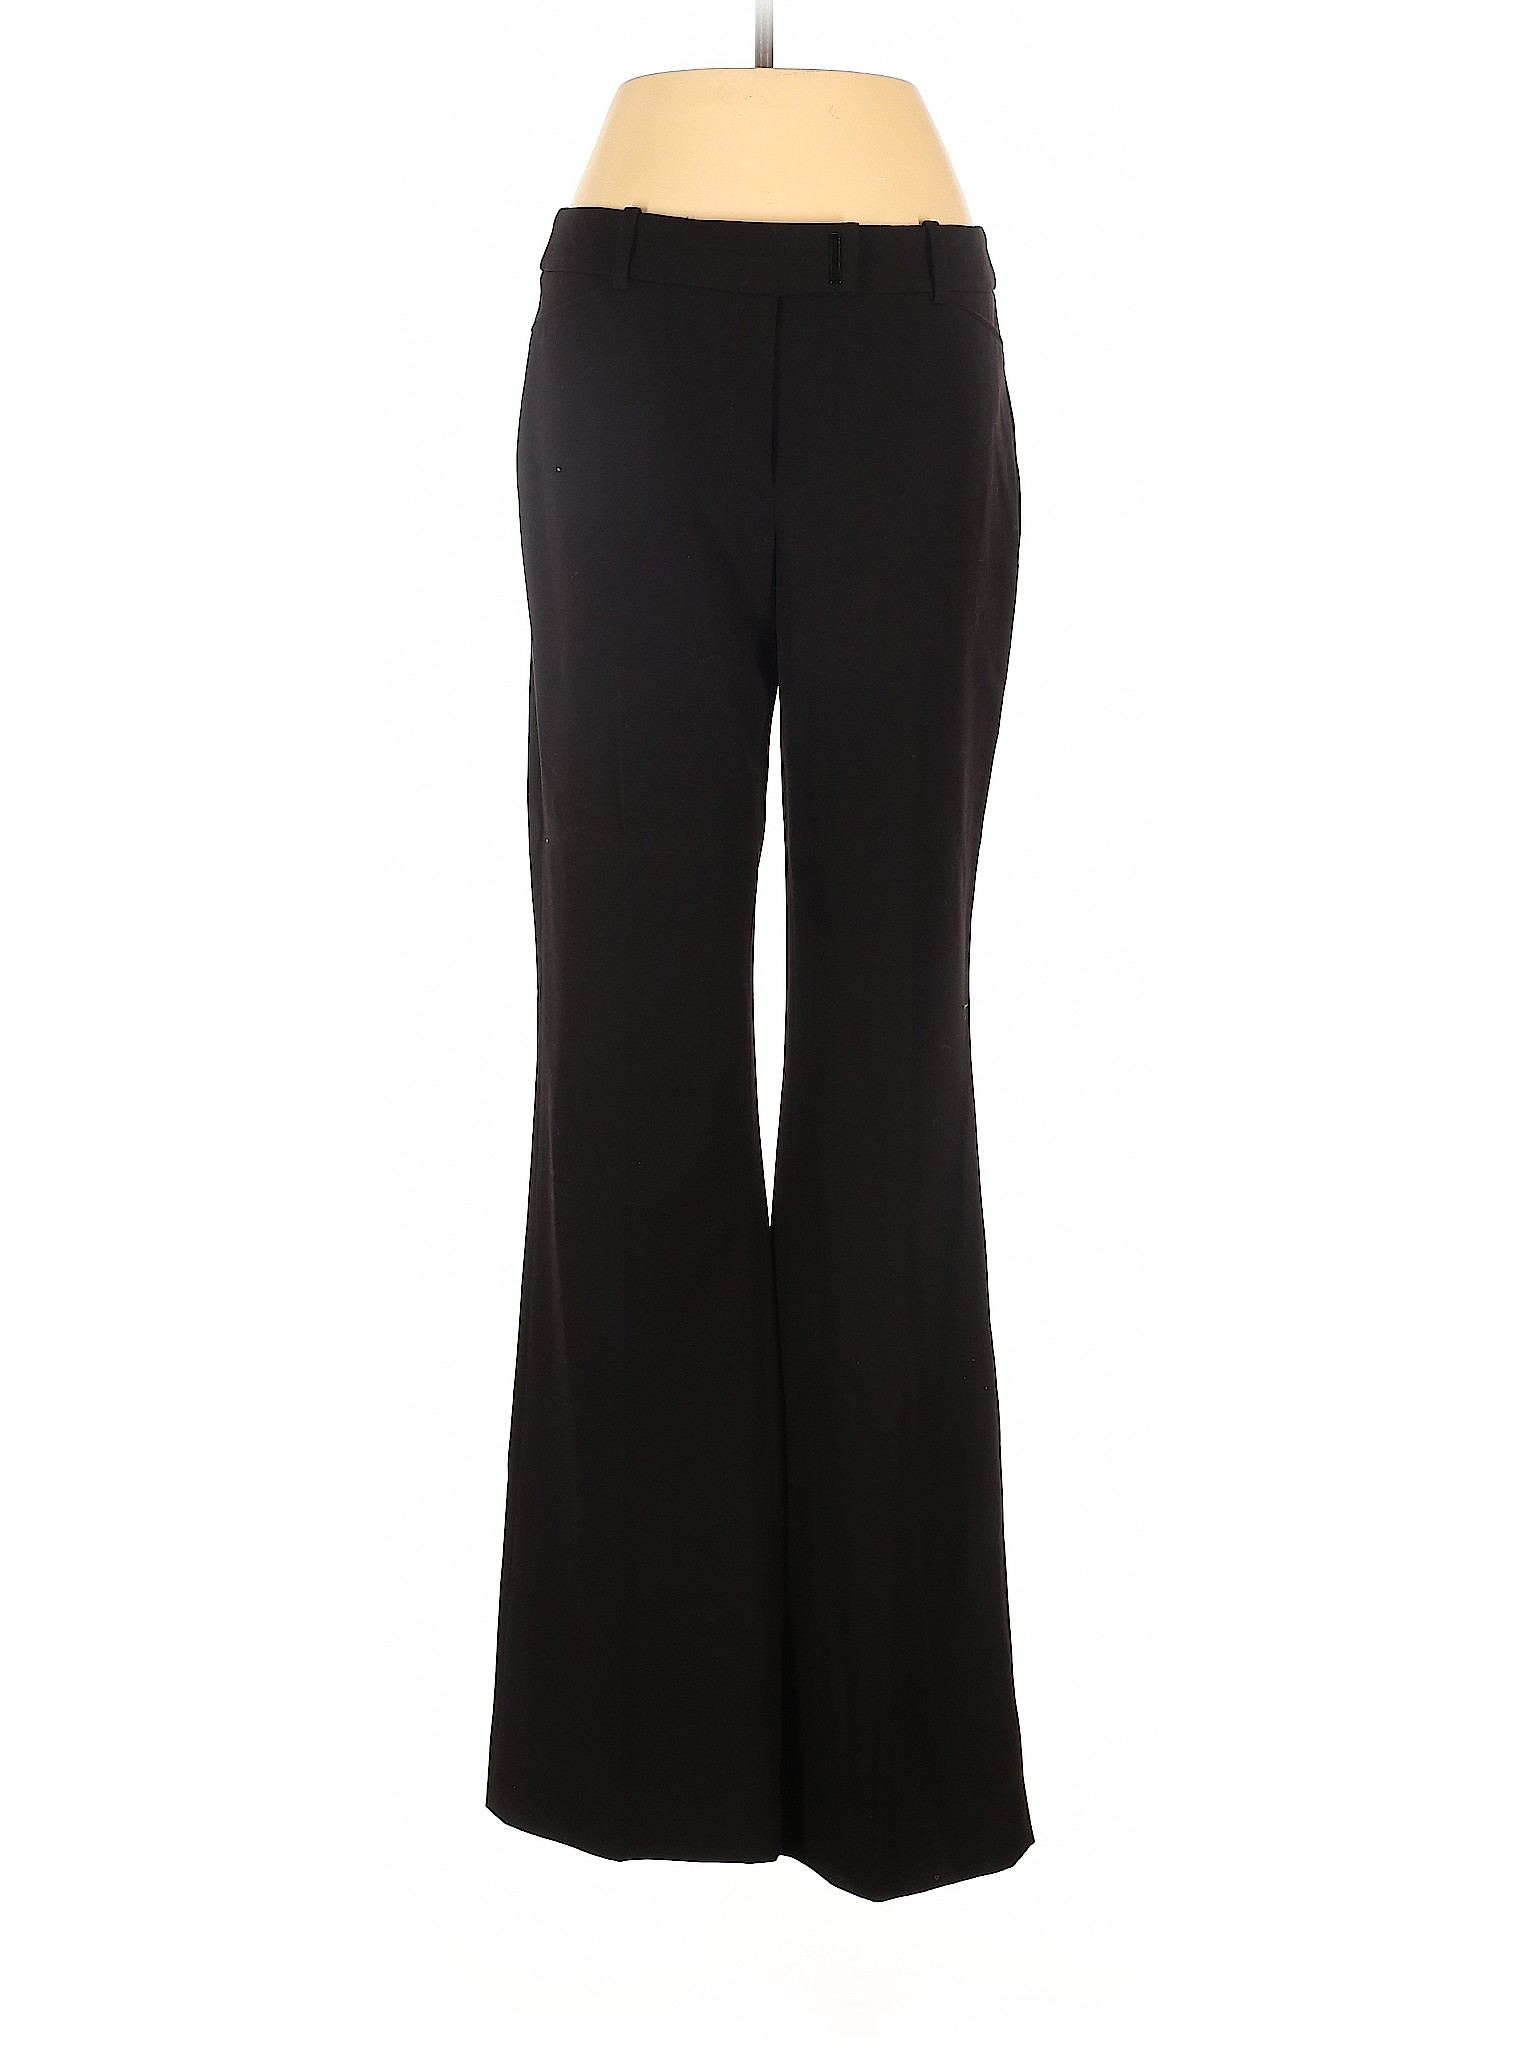 White House Black Market Women Black Dress Pants 4 | eBay